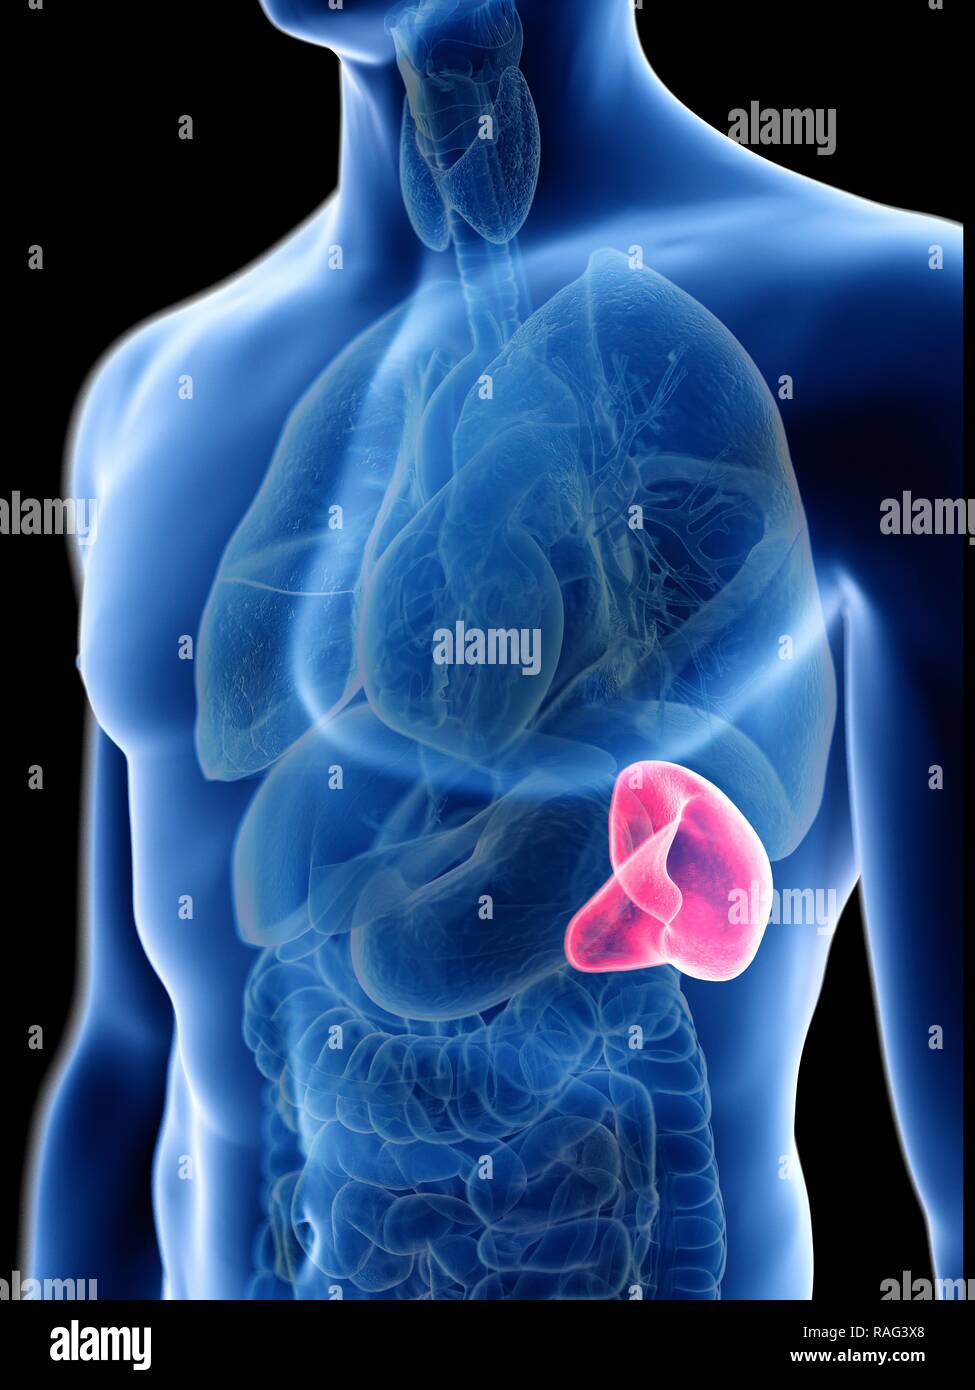 Illustration of a man's spleen Stock Photo - Alamy